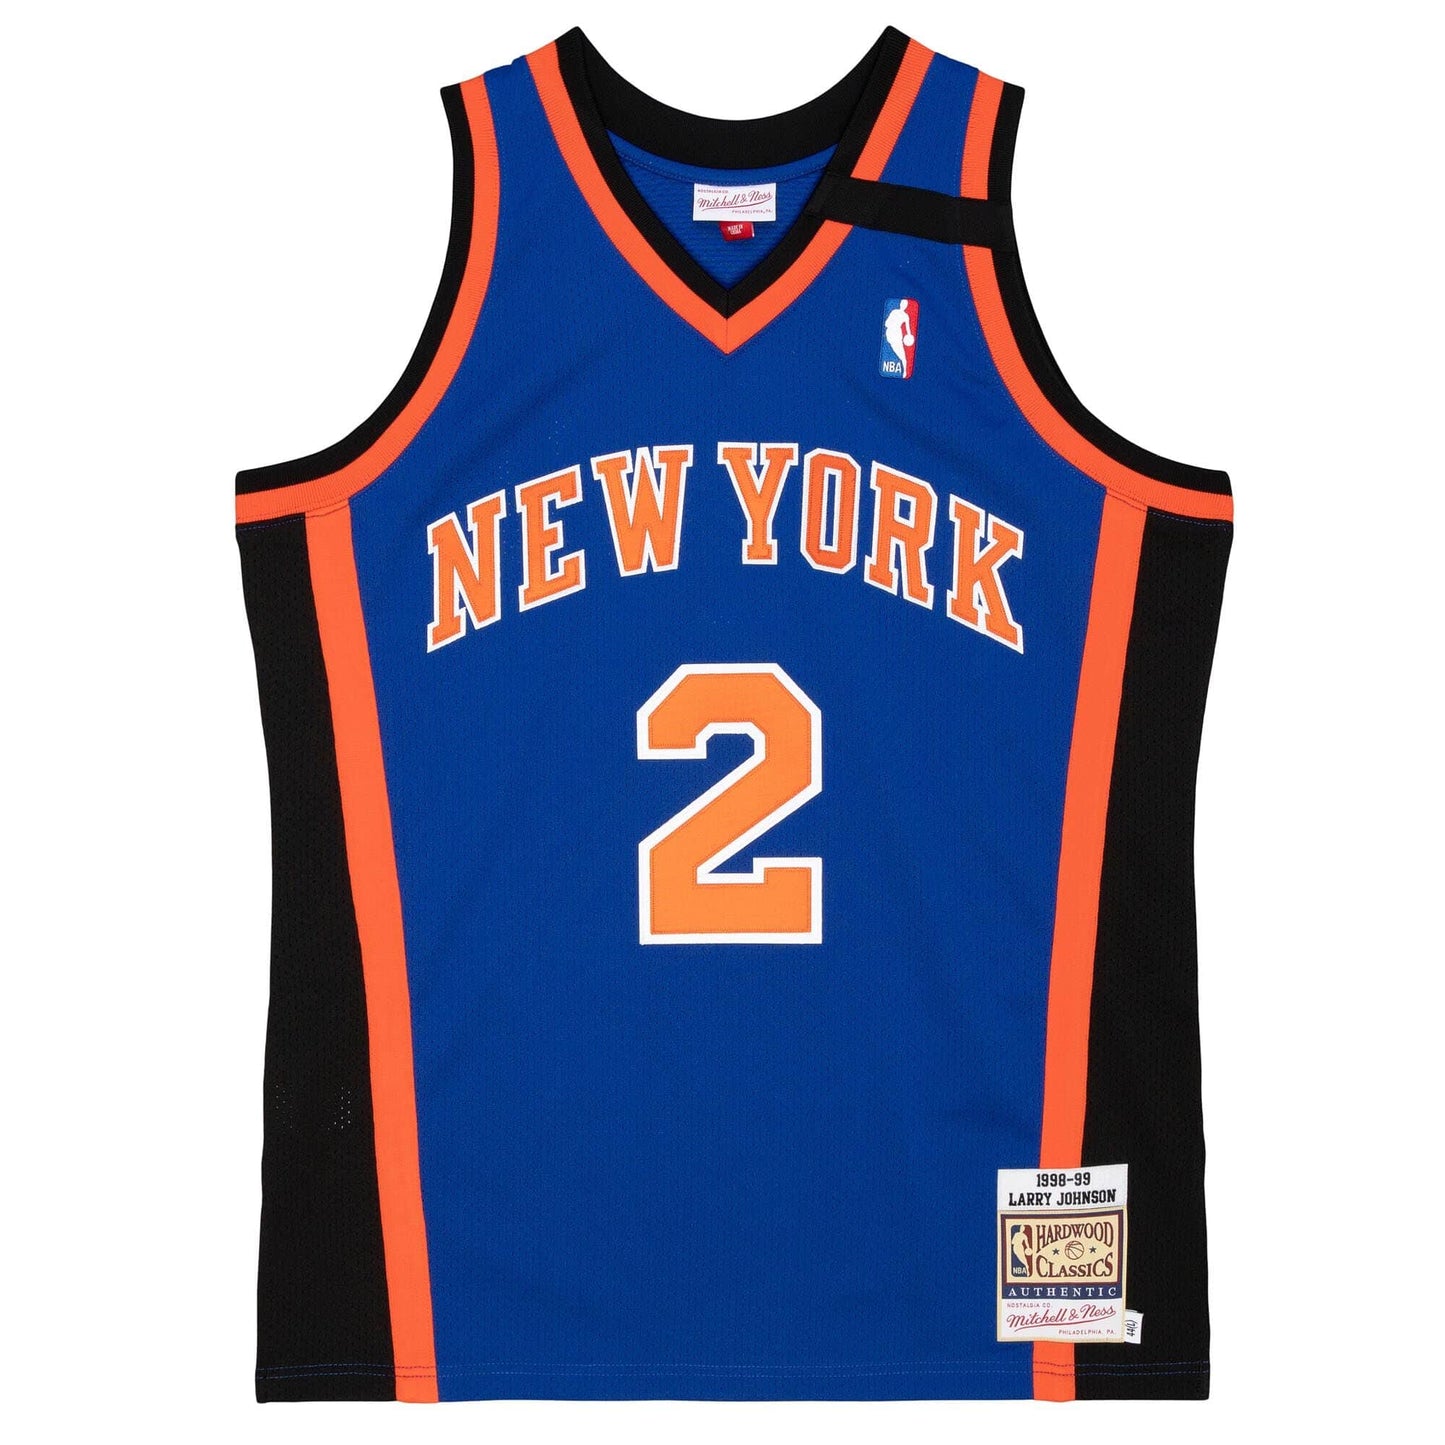 Authentic Larry Johnson New York Knicks 1998-99 Jersey